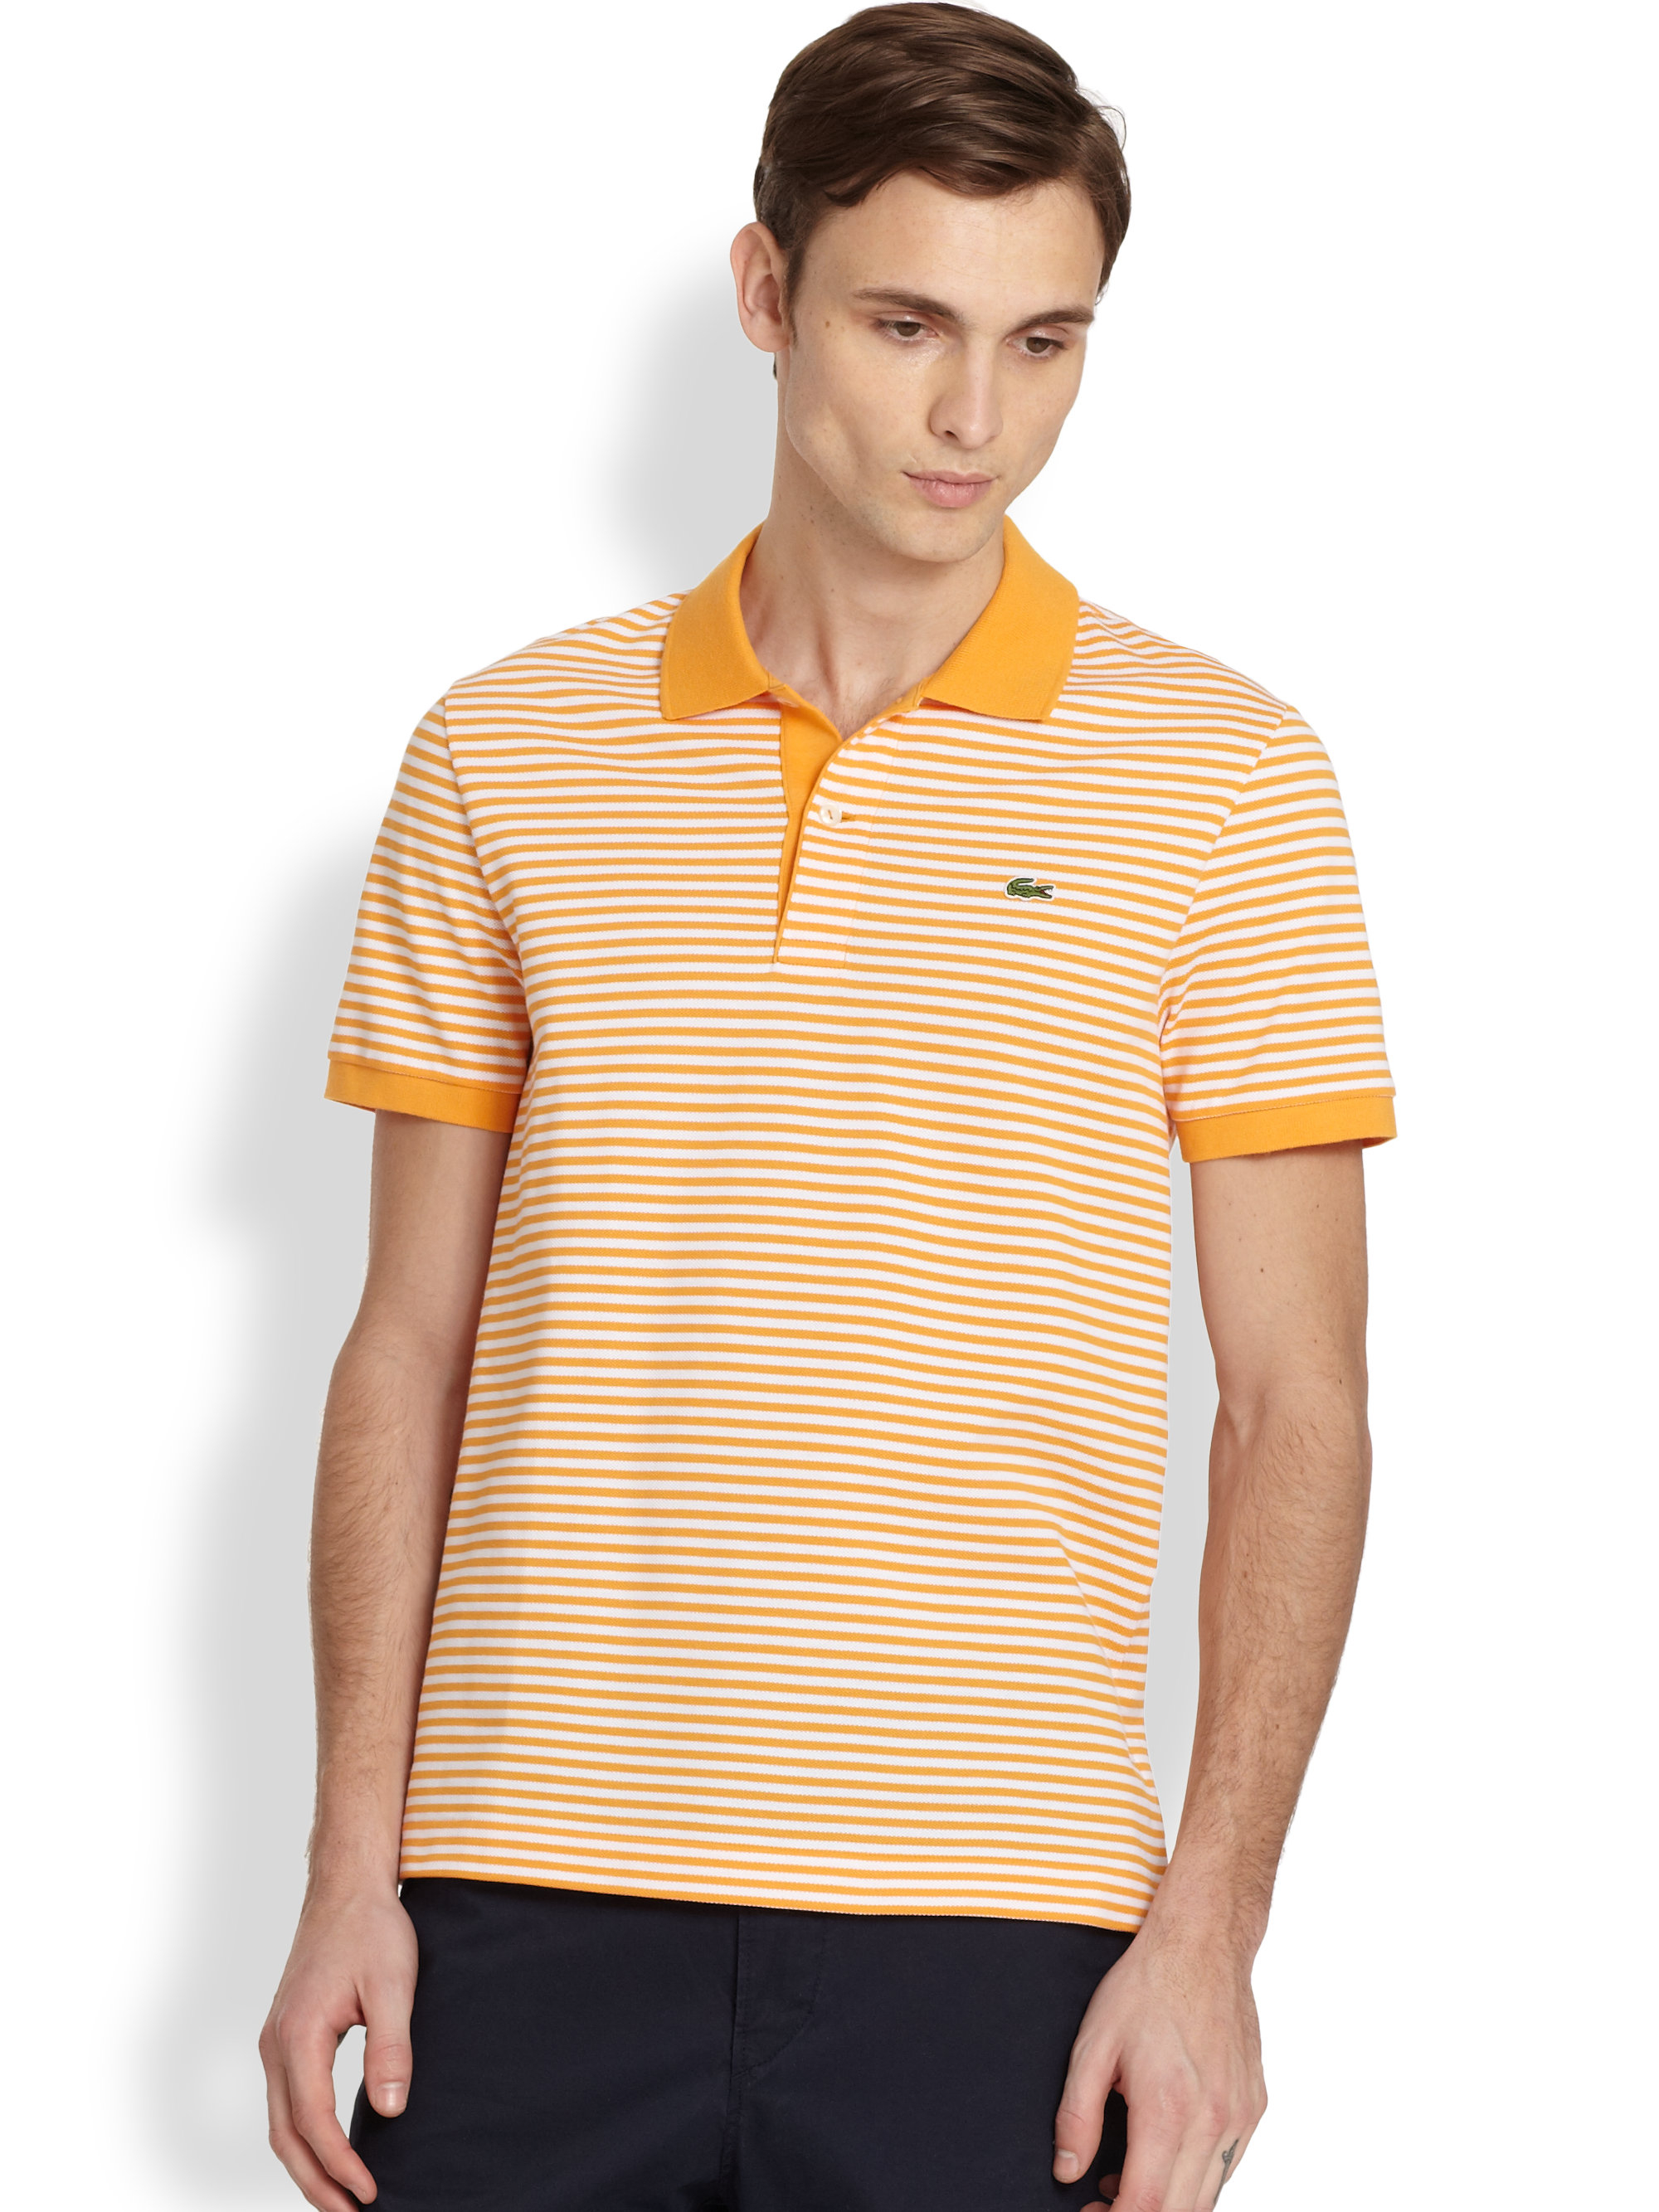 Lyst - Lacoste Heritage Fin Stripe Polo Shirt in Orange for Men